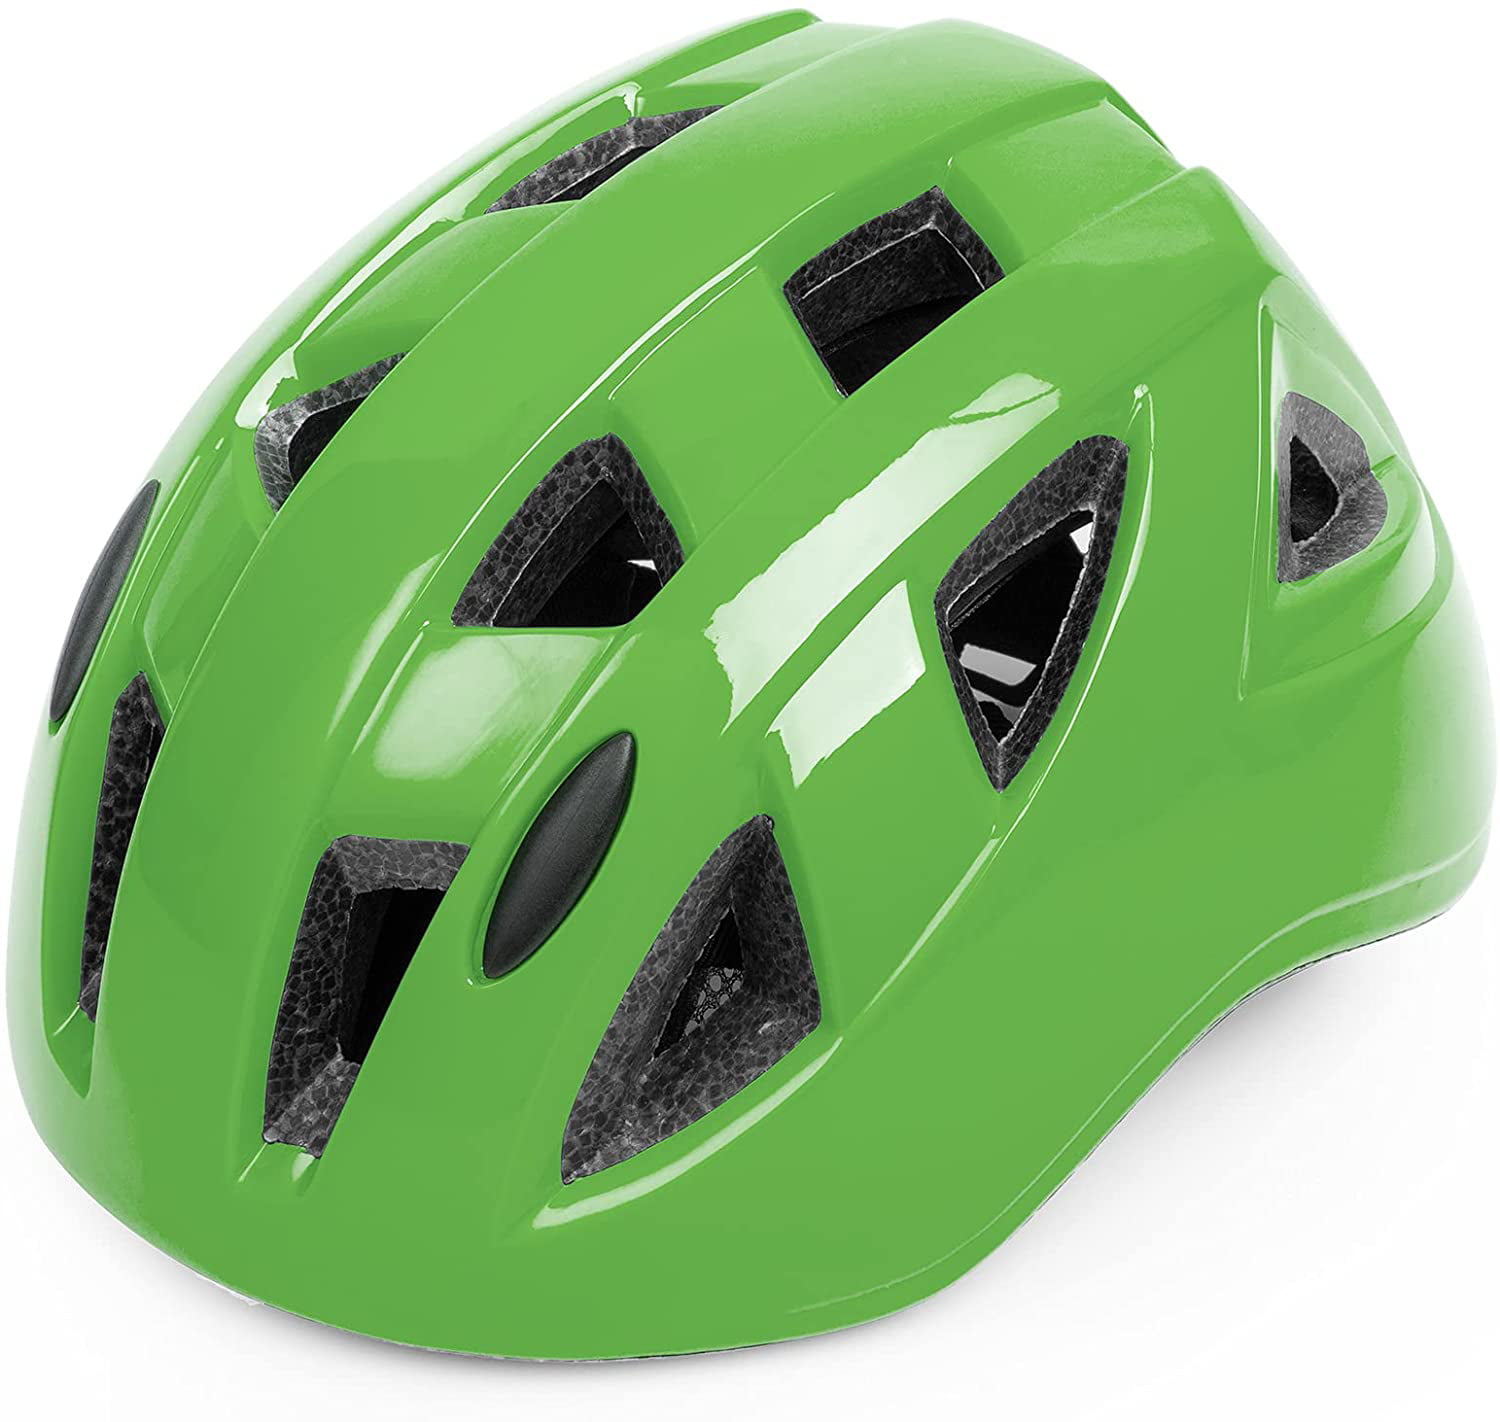 Kids Helmet Child Multi-sport Safety Bike Helmet Cycling Skating for Boys/Girls 